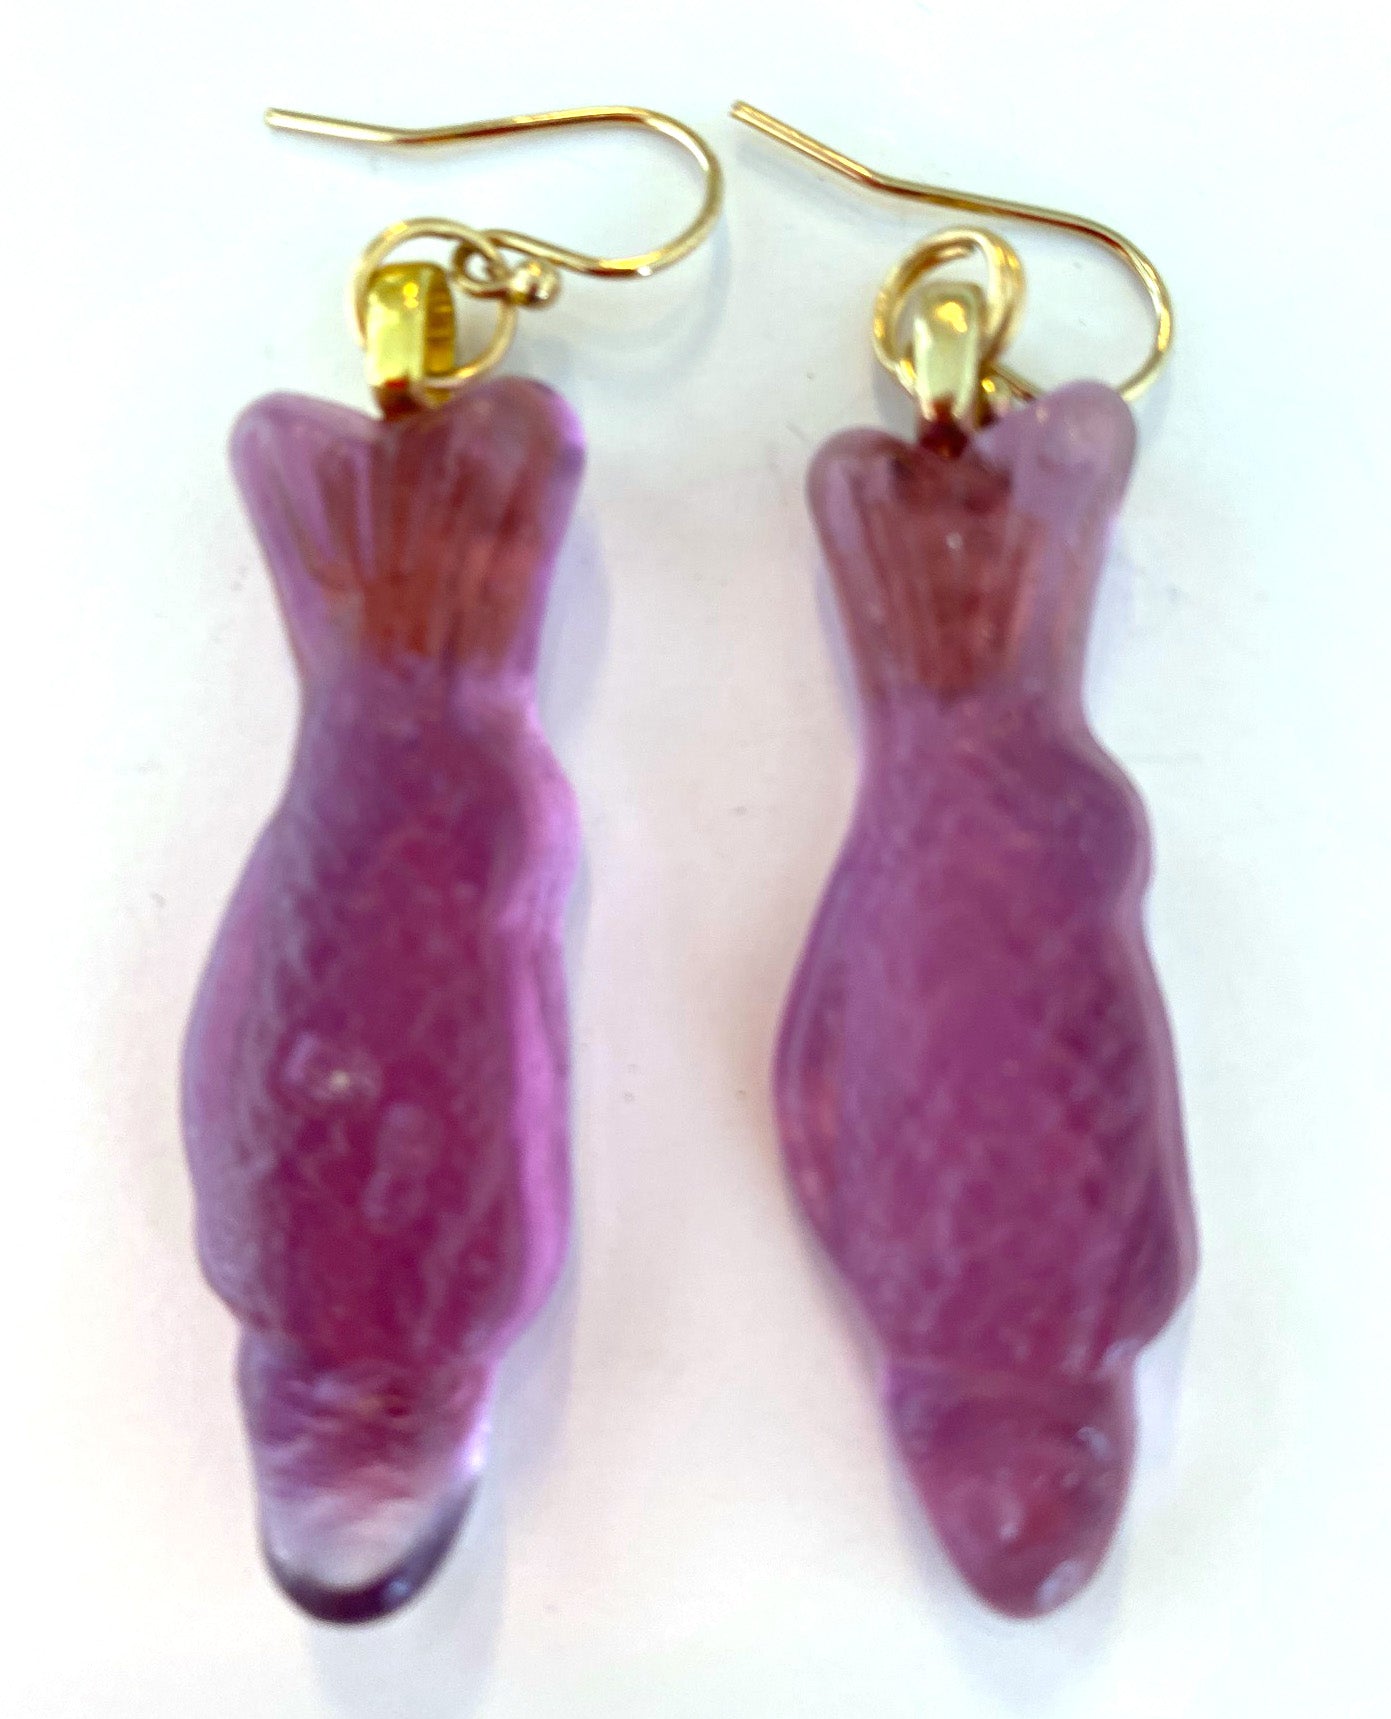 21. Hot Glass Swedish Fish Earring (Grape)